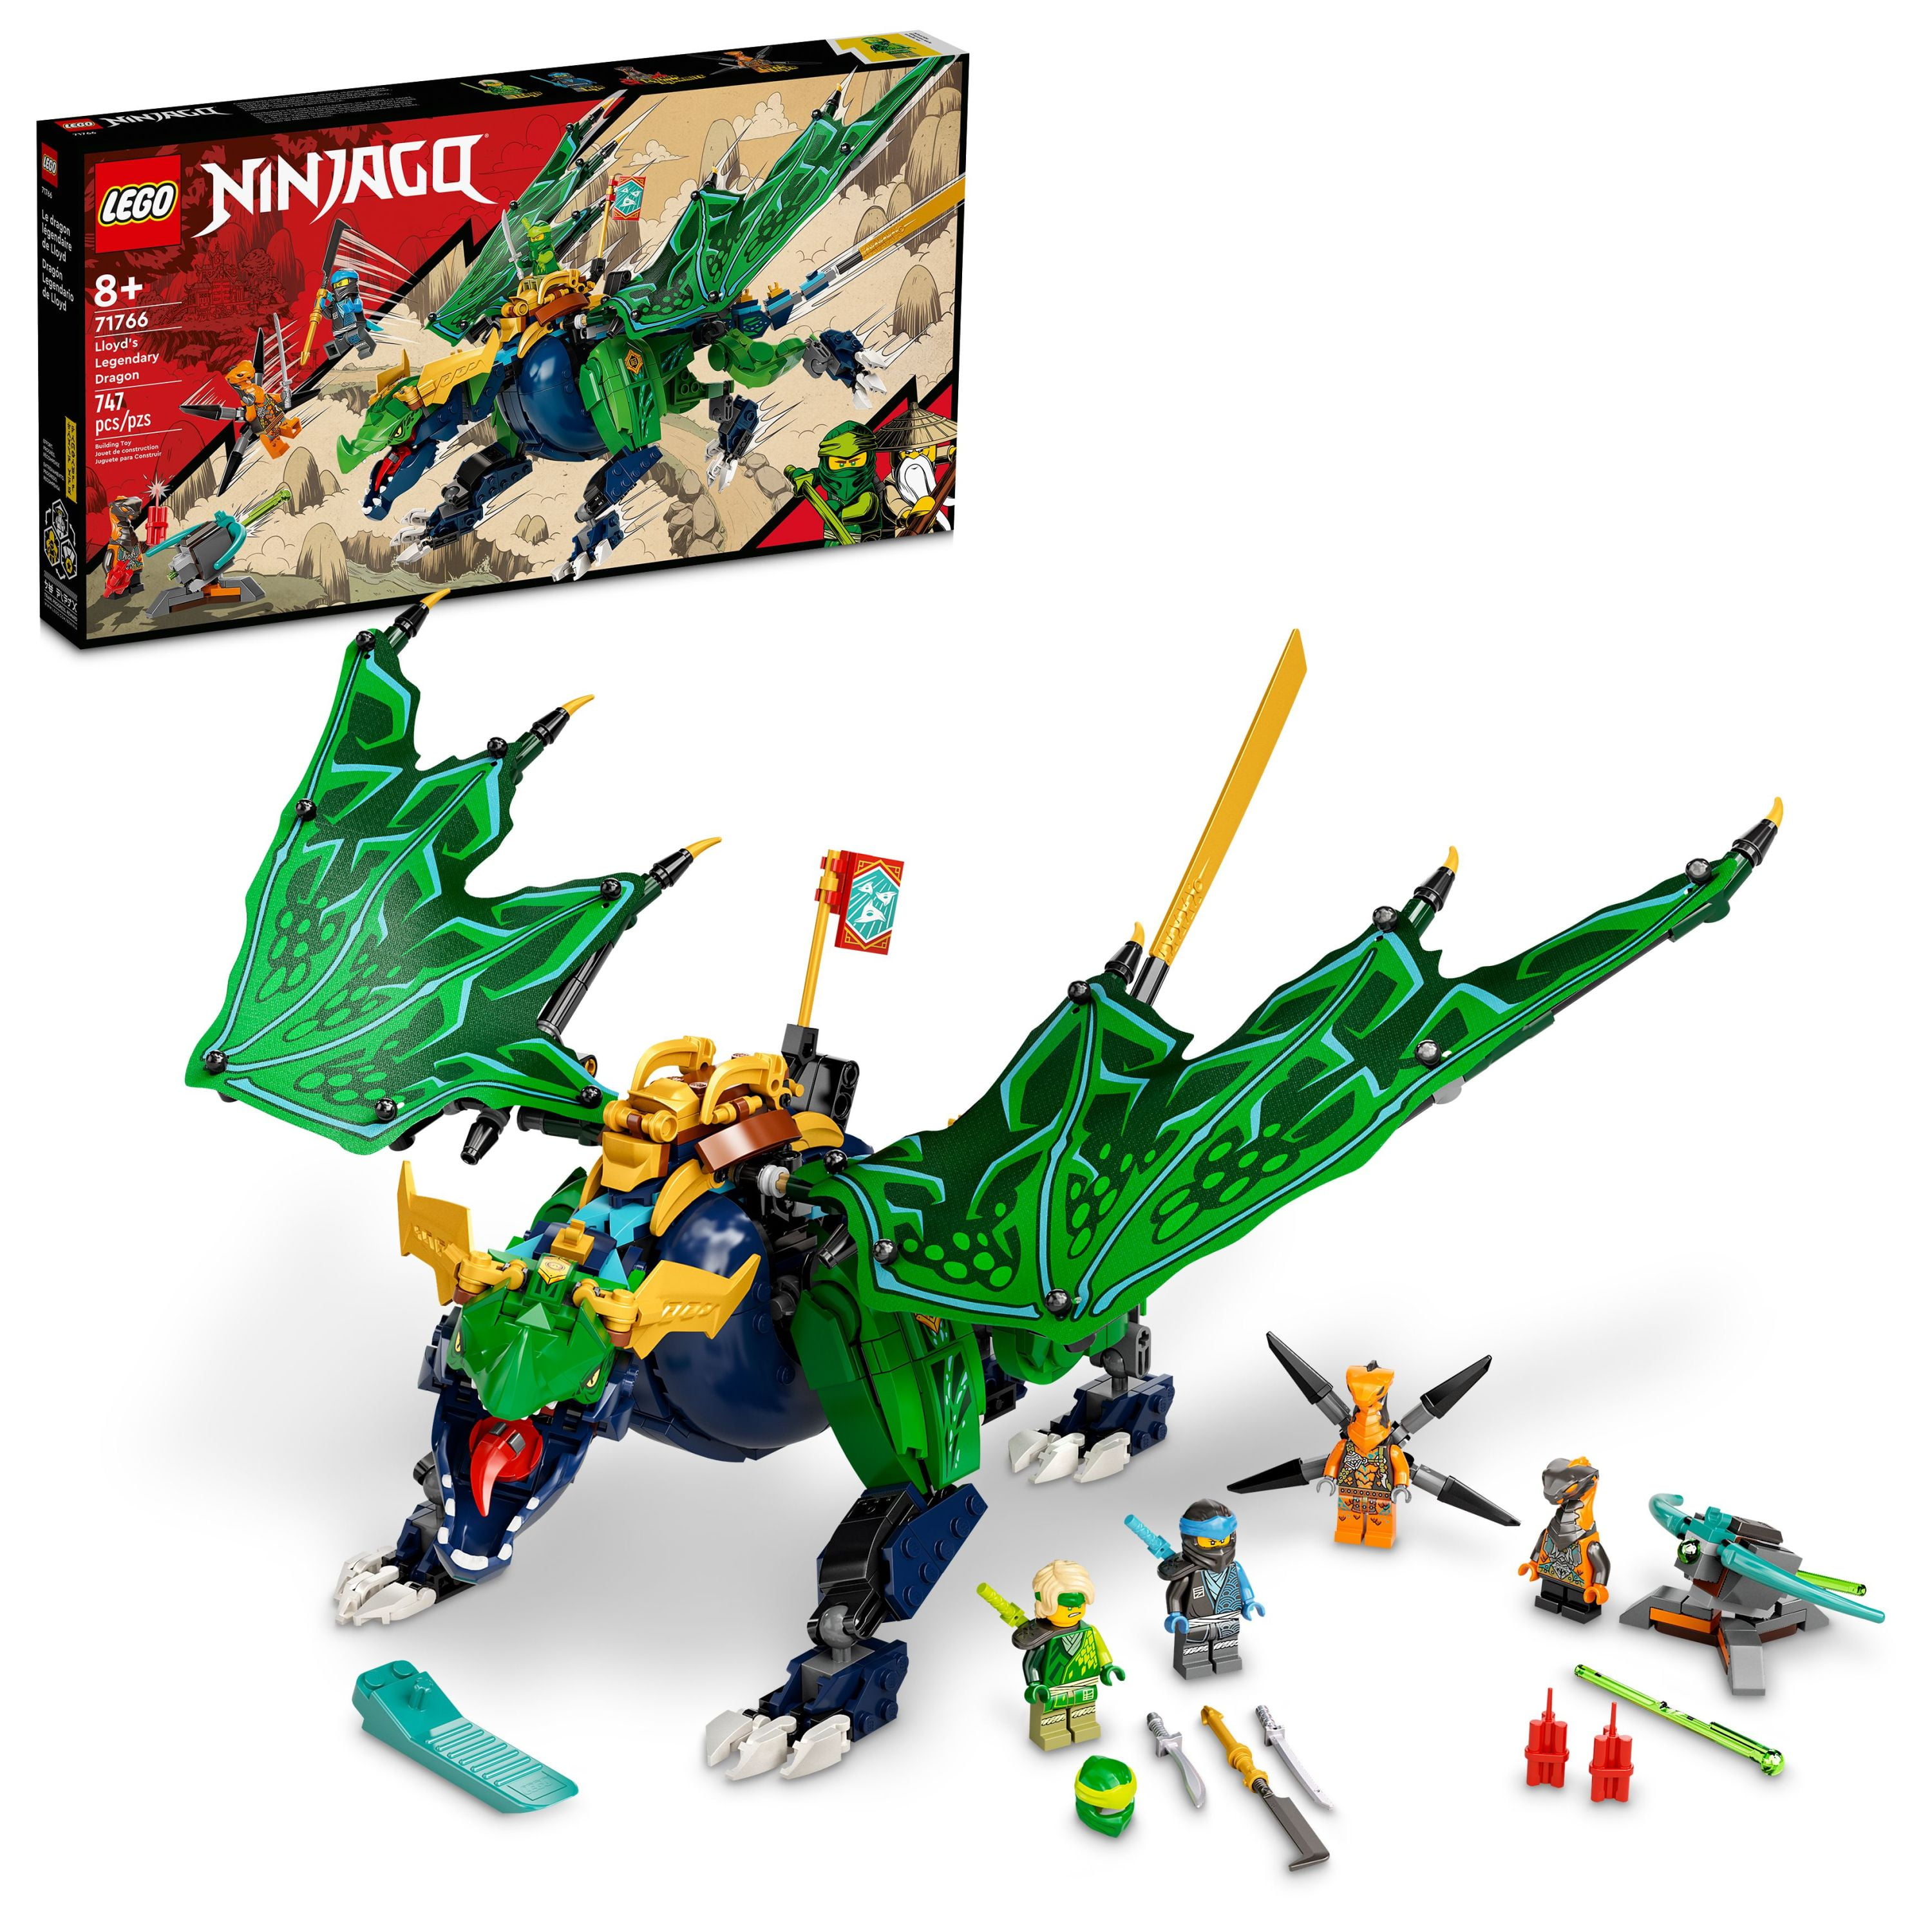 LEGO NINJAGO Lloyd's Legendary Dragon Toy, 71766 Set with Snake Figures & Nya Minifigure, Collectible Banner Series - Walmart.com